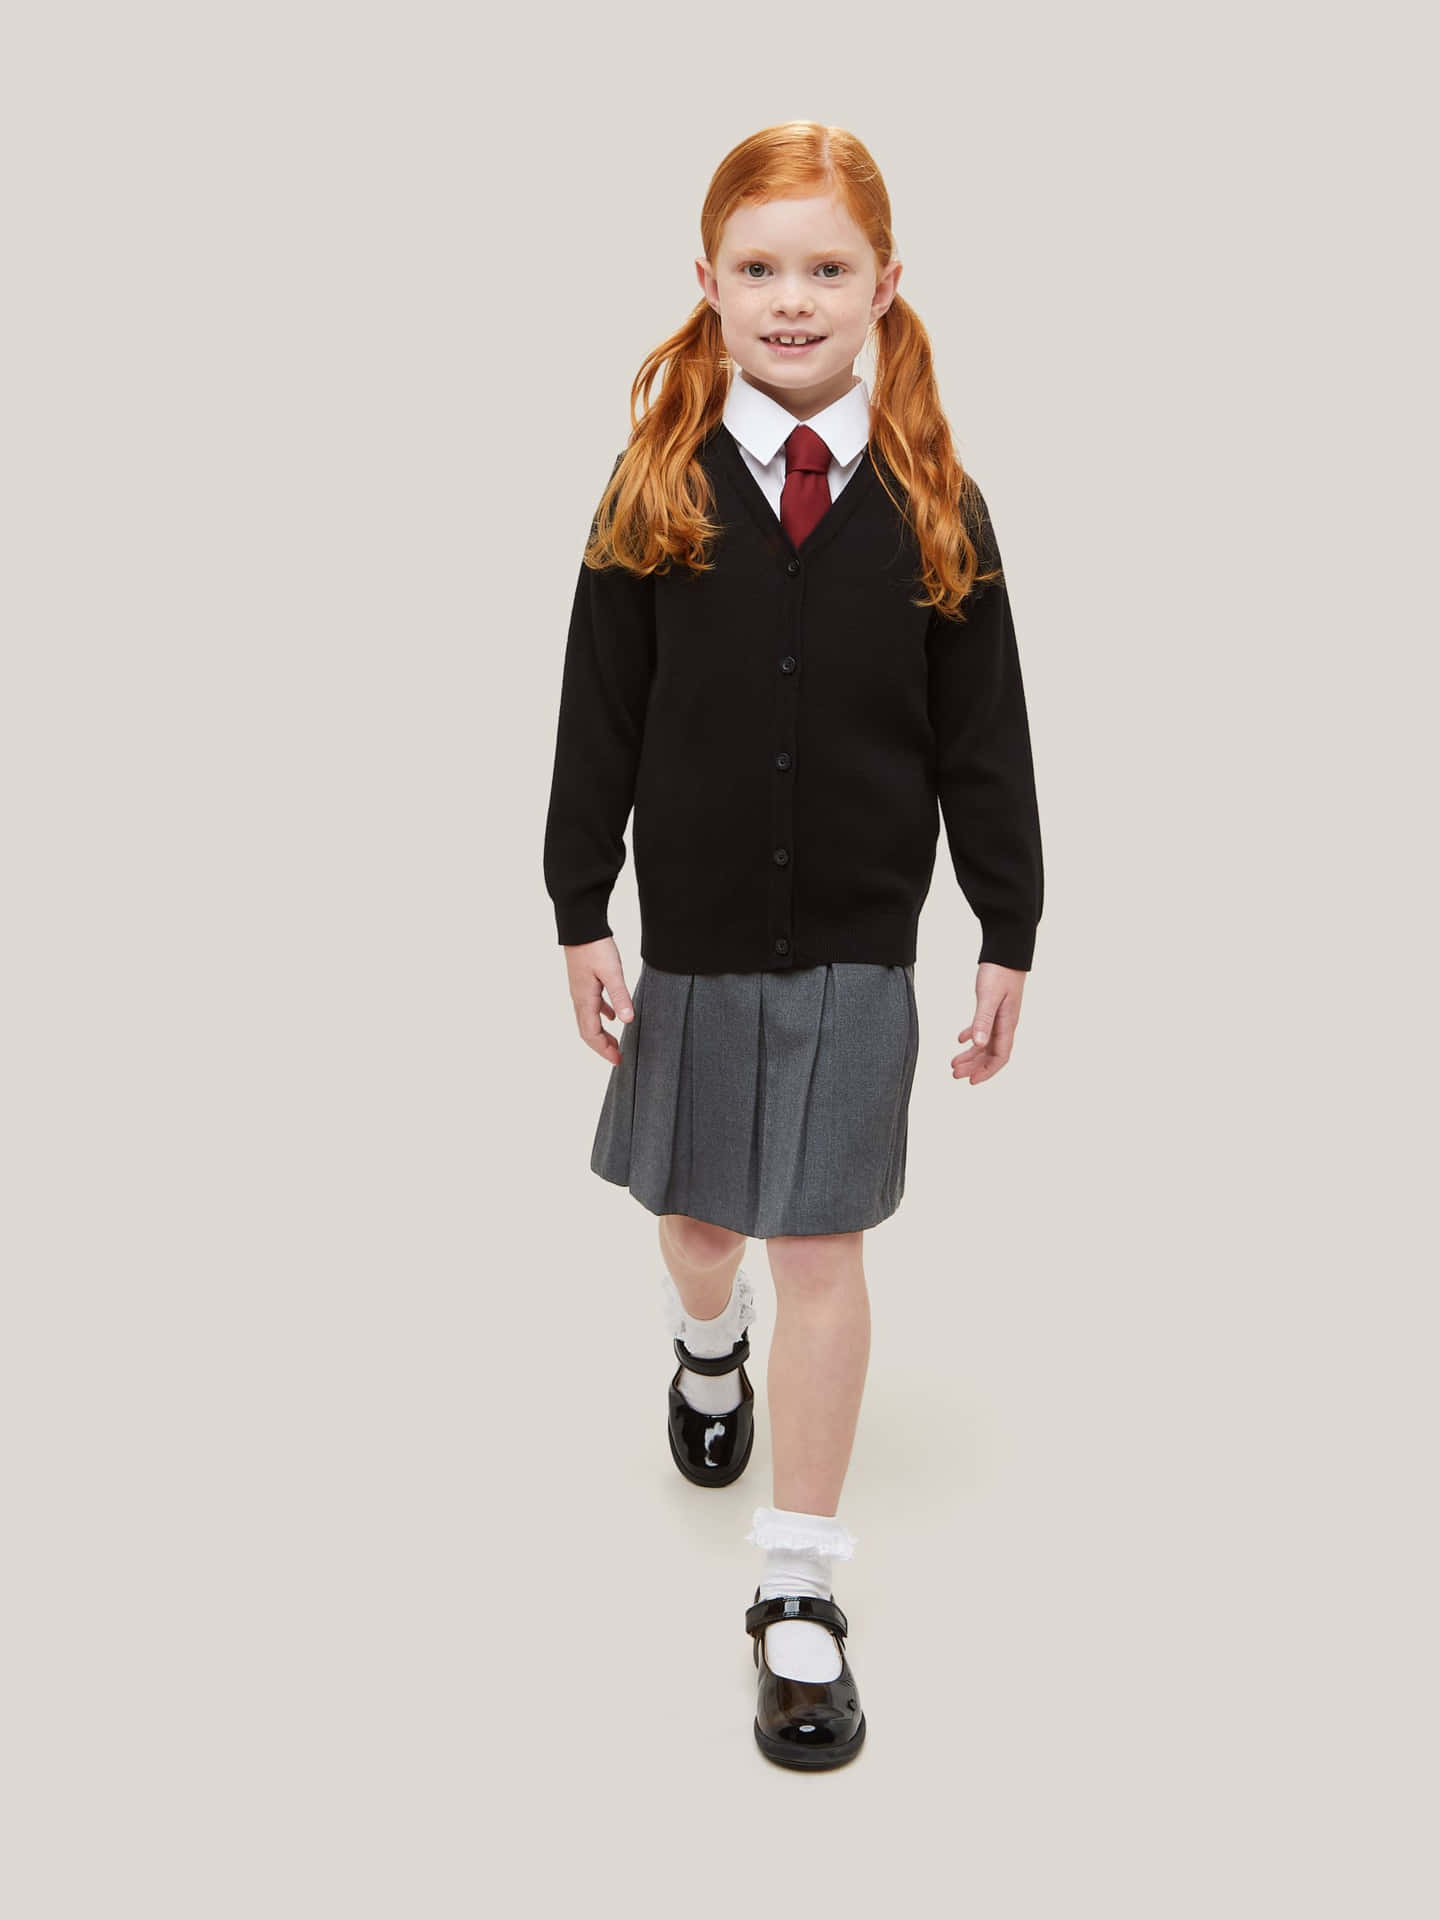 School Girl British Uniform Picture